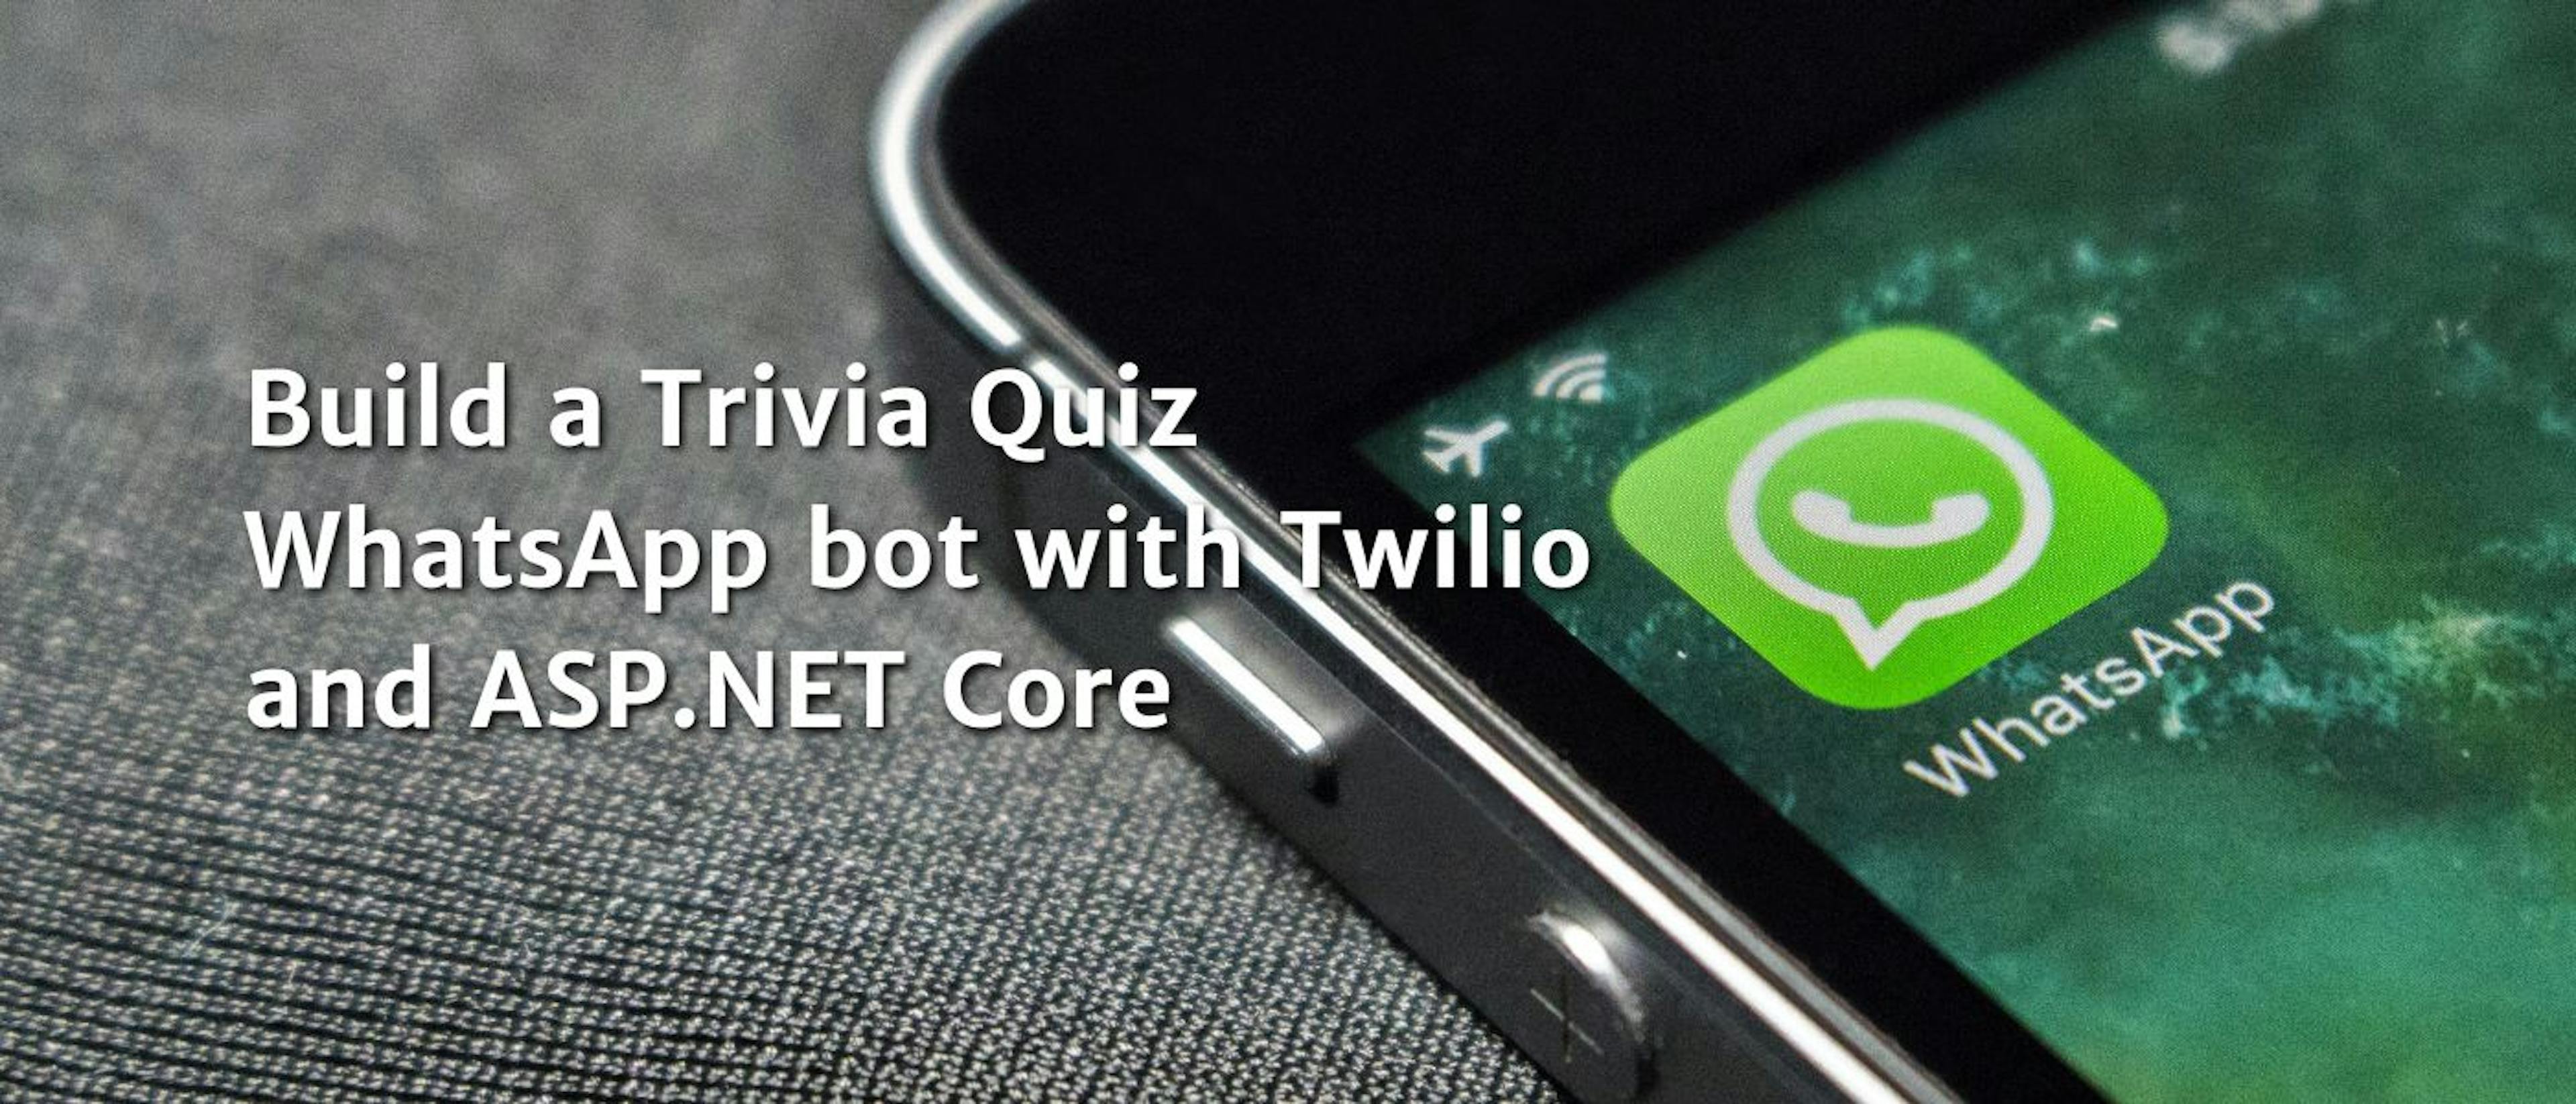 featured image - 使用 Twilio 和 ASP.NET Core 构建问答测验 WhatsApp 机器人